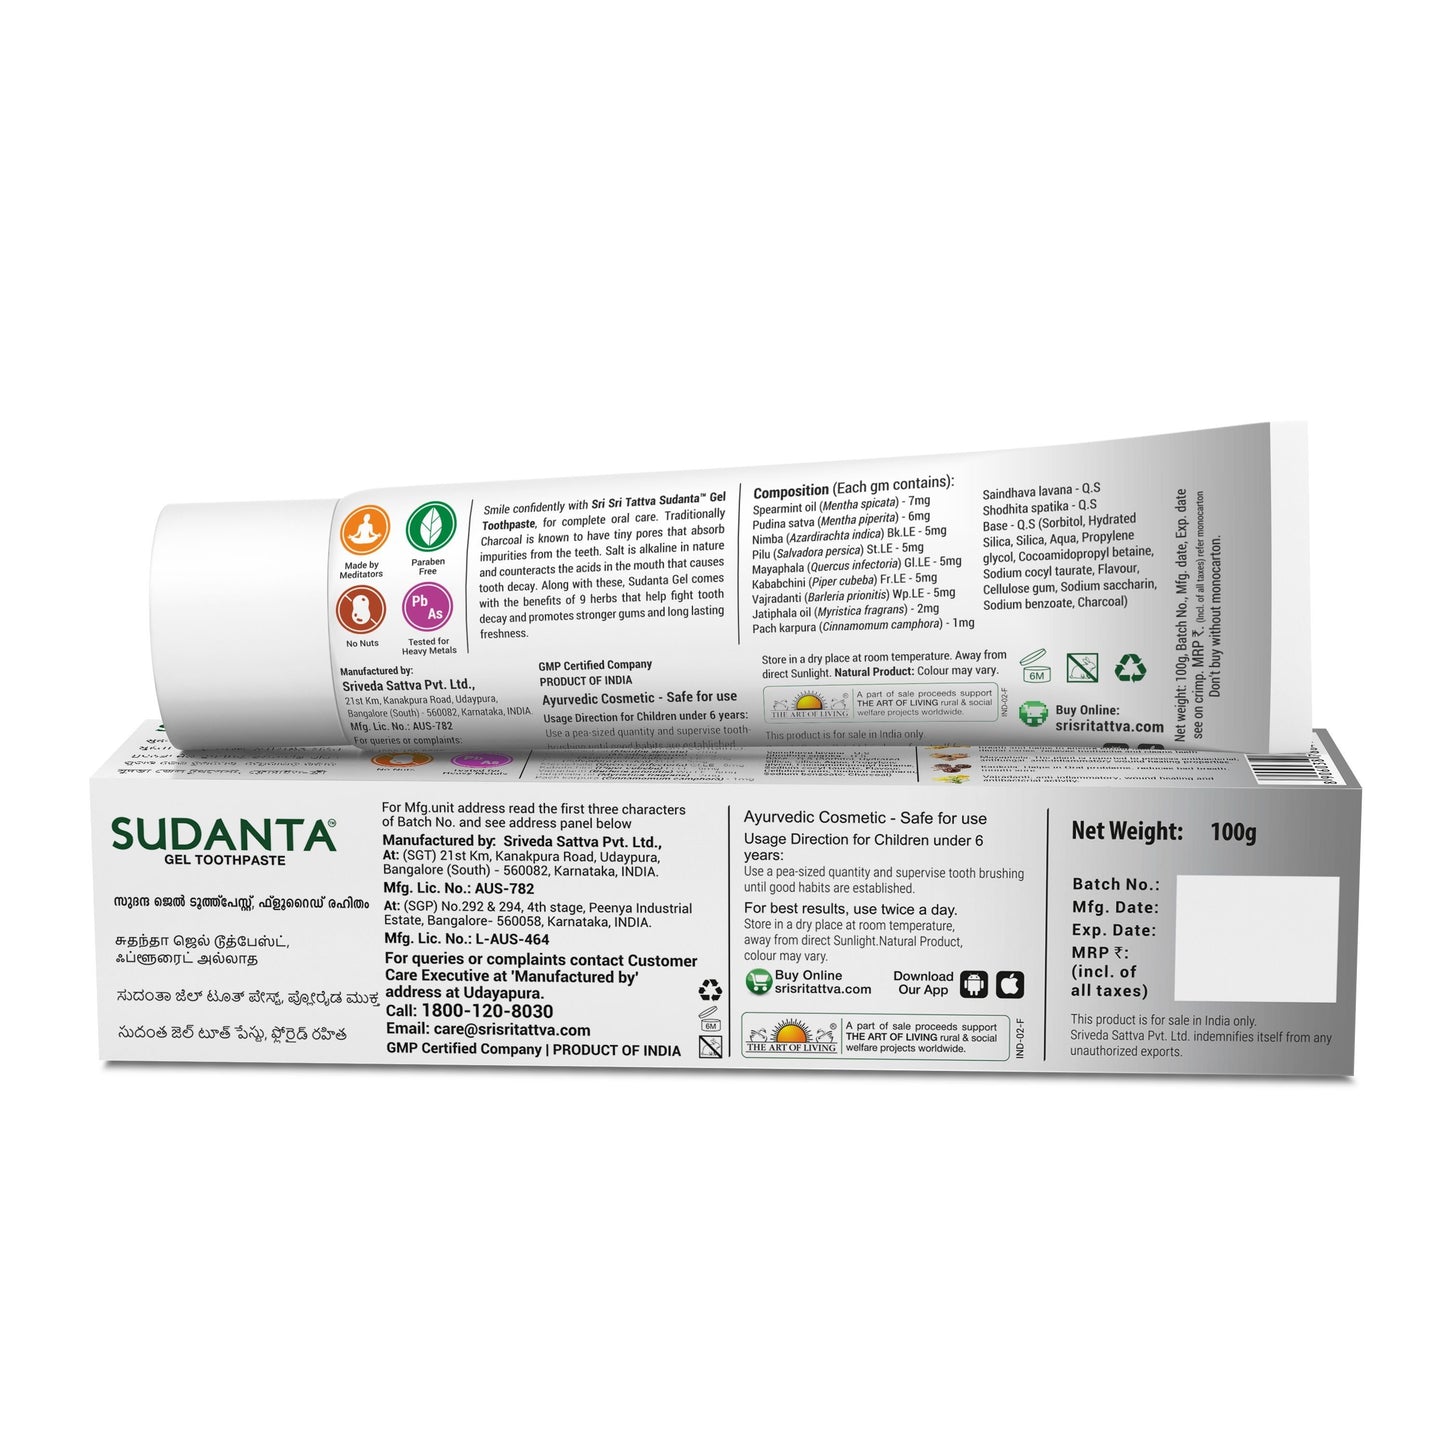 Sudanta Gel Toothpaste - With Charcoal & Salt. SLS Free. Non - Fluoride - 100% Vegetarian, 100g - Sri Sri Tattva